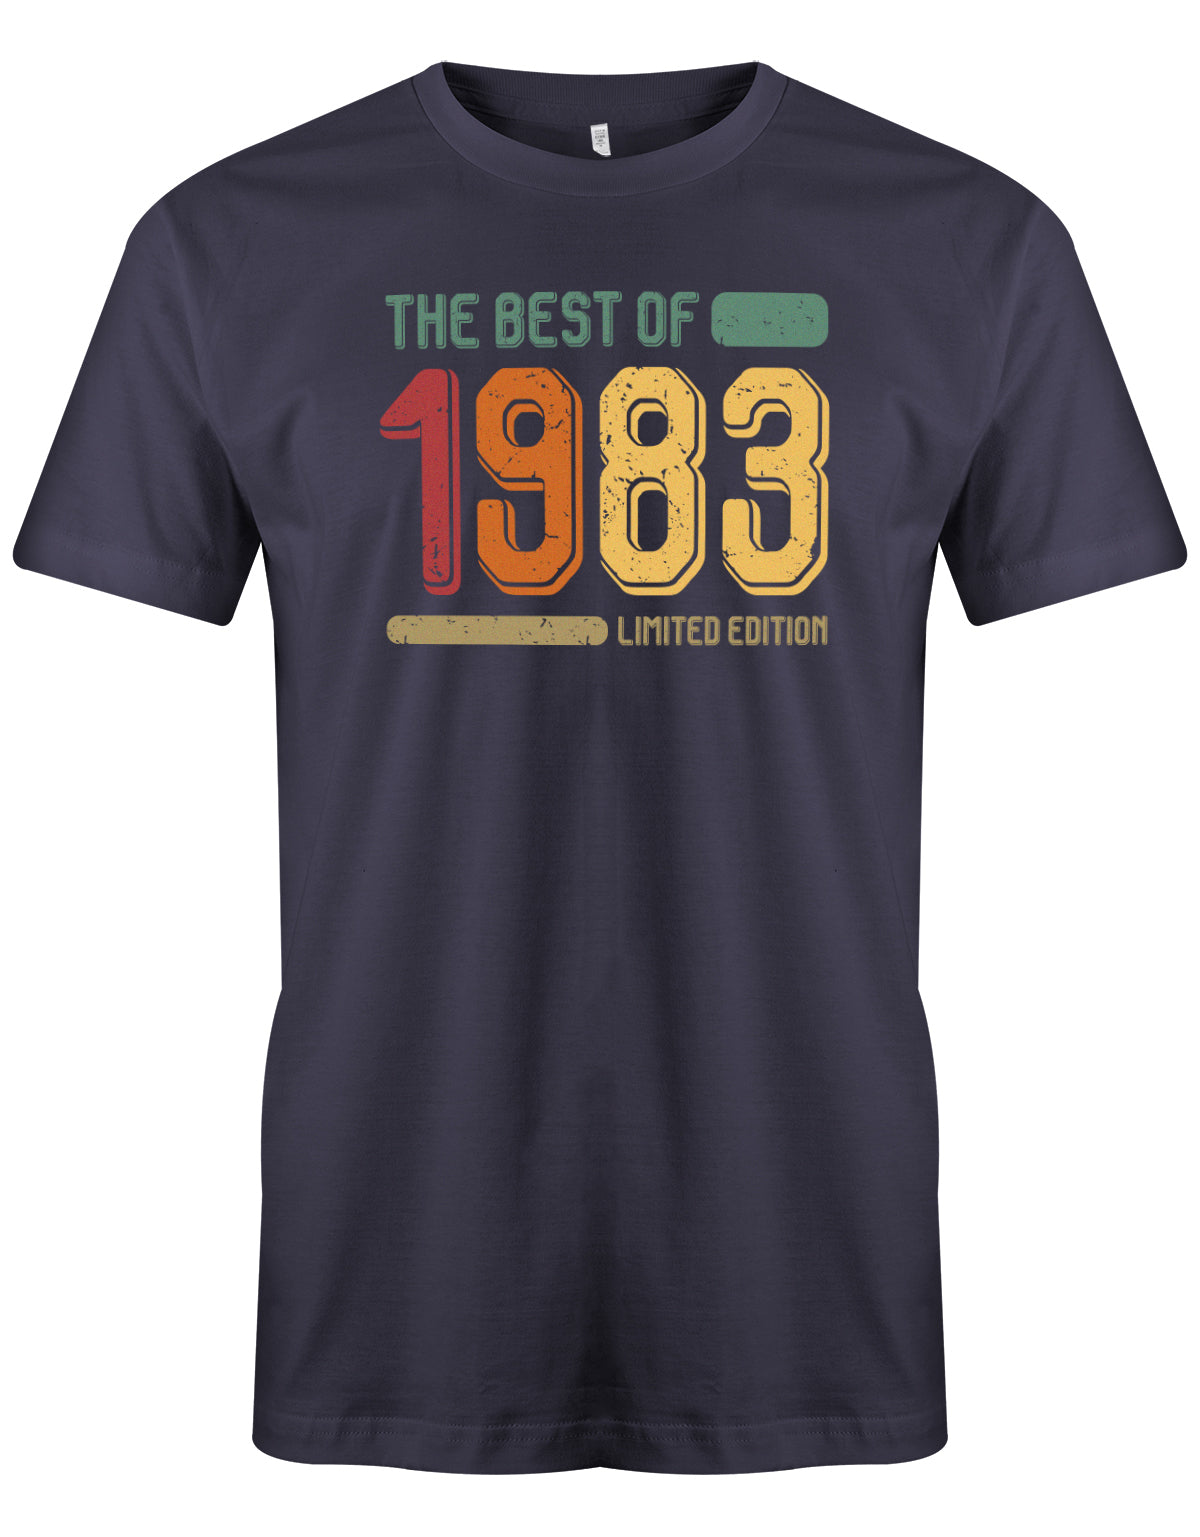 The best of 1983 Limited Edition Vintage TShirt - T-Shirt 40 Geburtstag Männer myShirtStore Navy